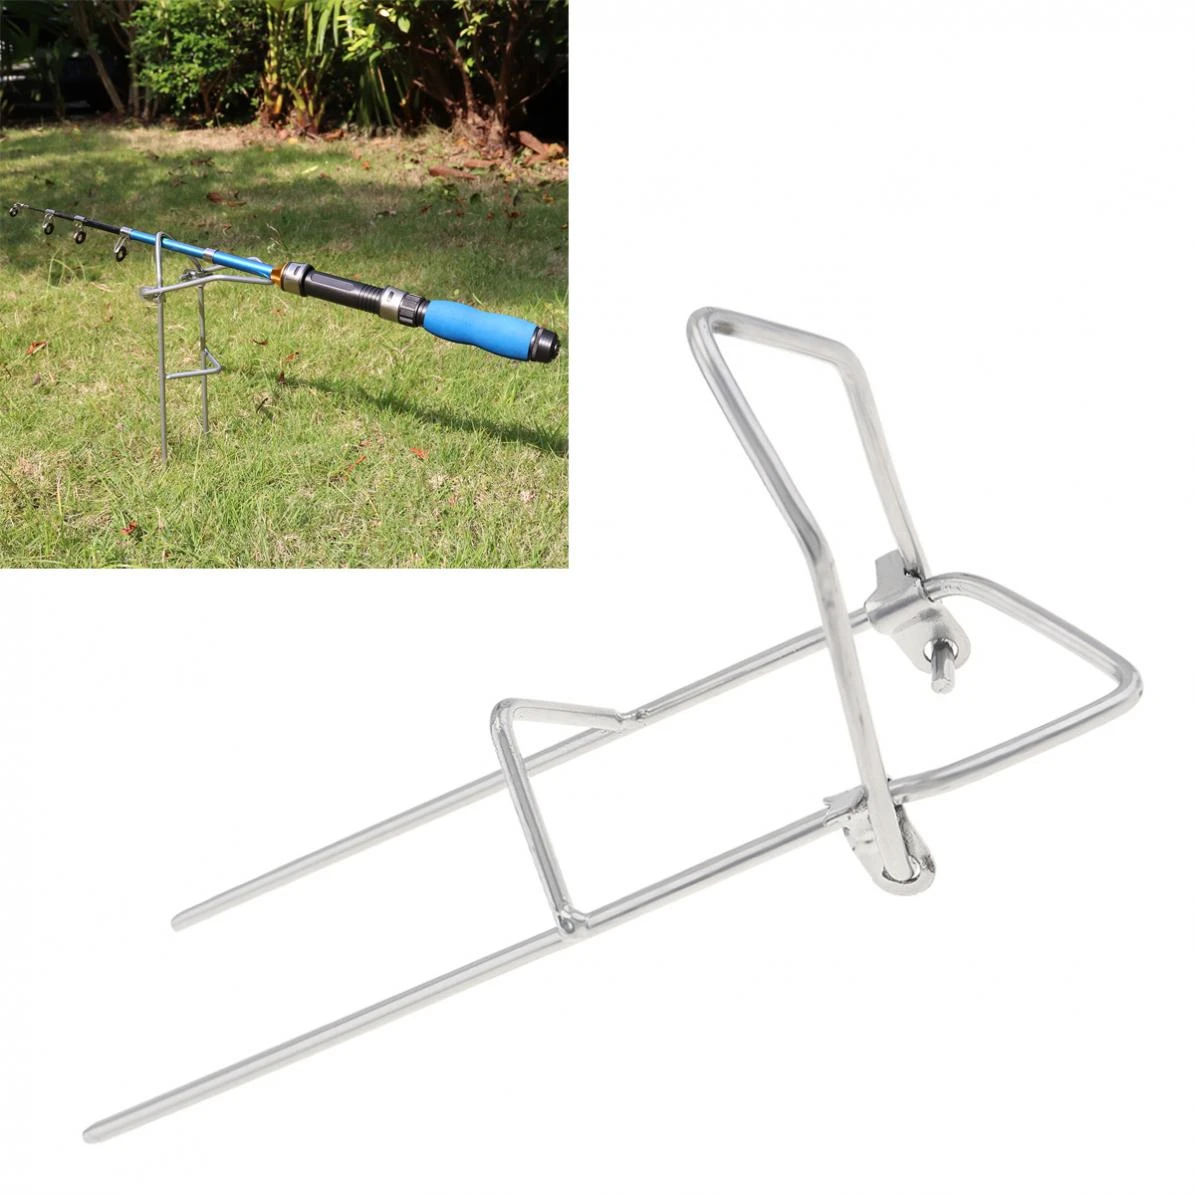 Stainless Steel Telescopic Tripod Fishing Rod Stand Rest Ground Holder Bracket